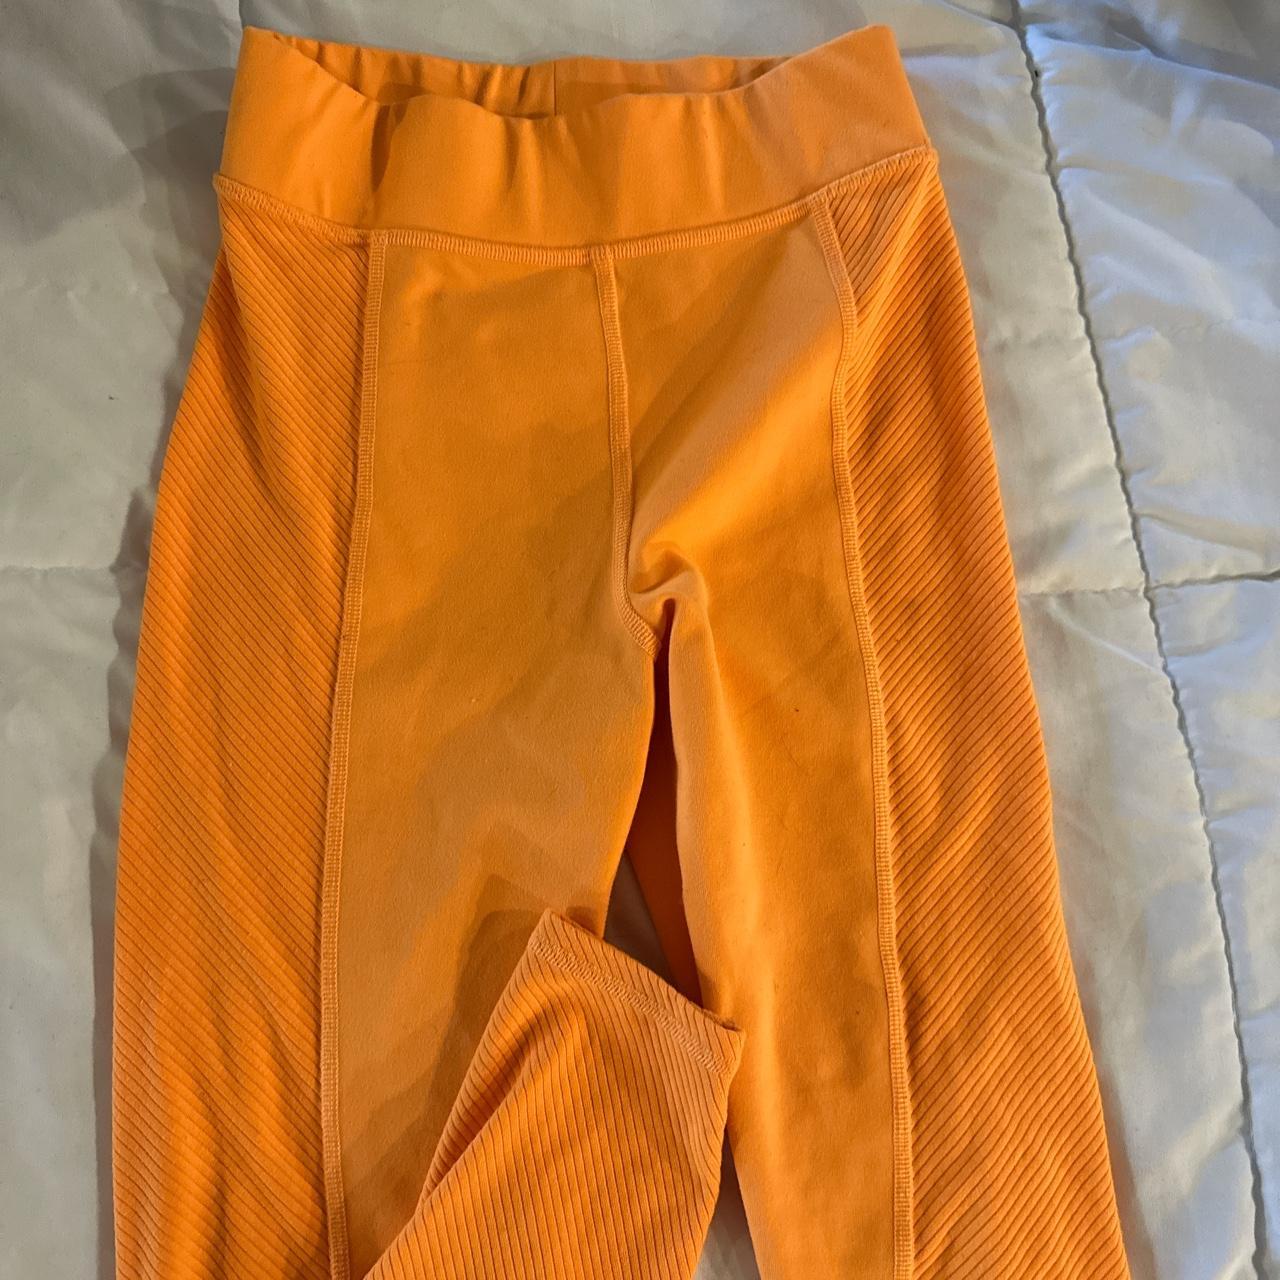 Alo yoga orange leggings and other ribbed